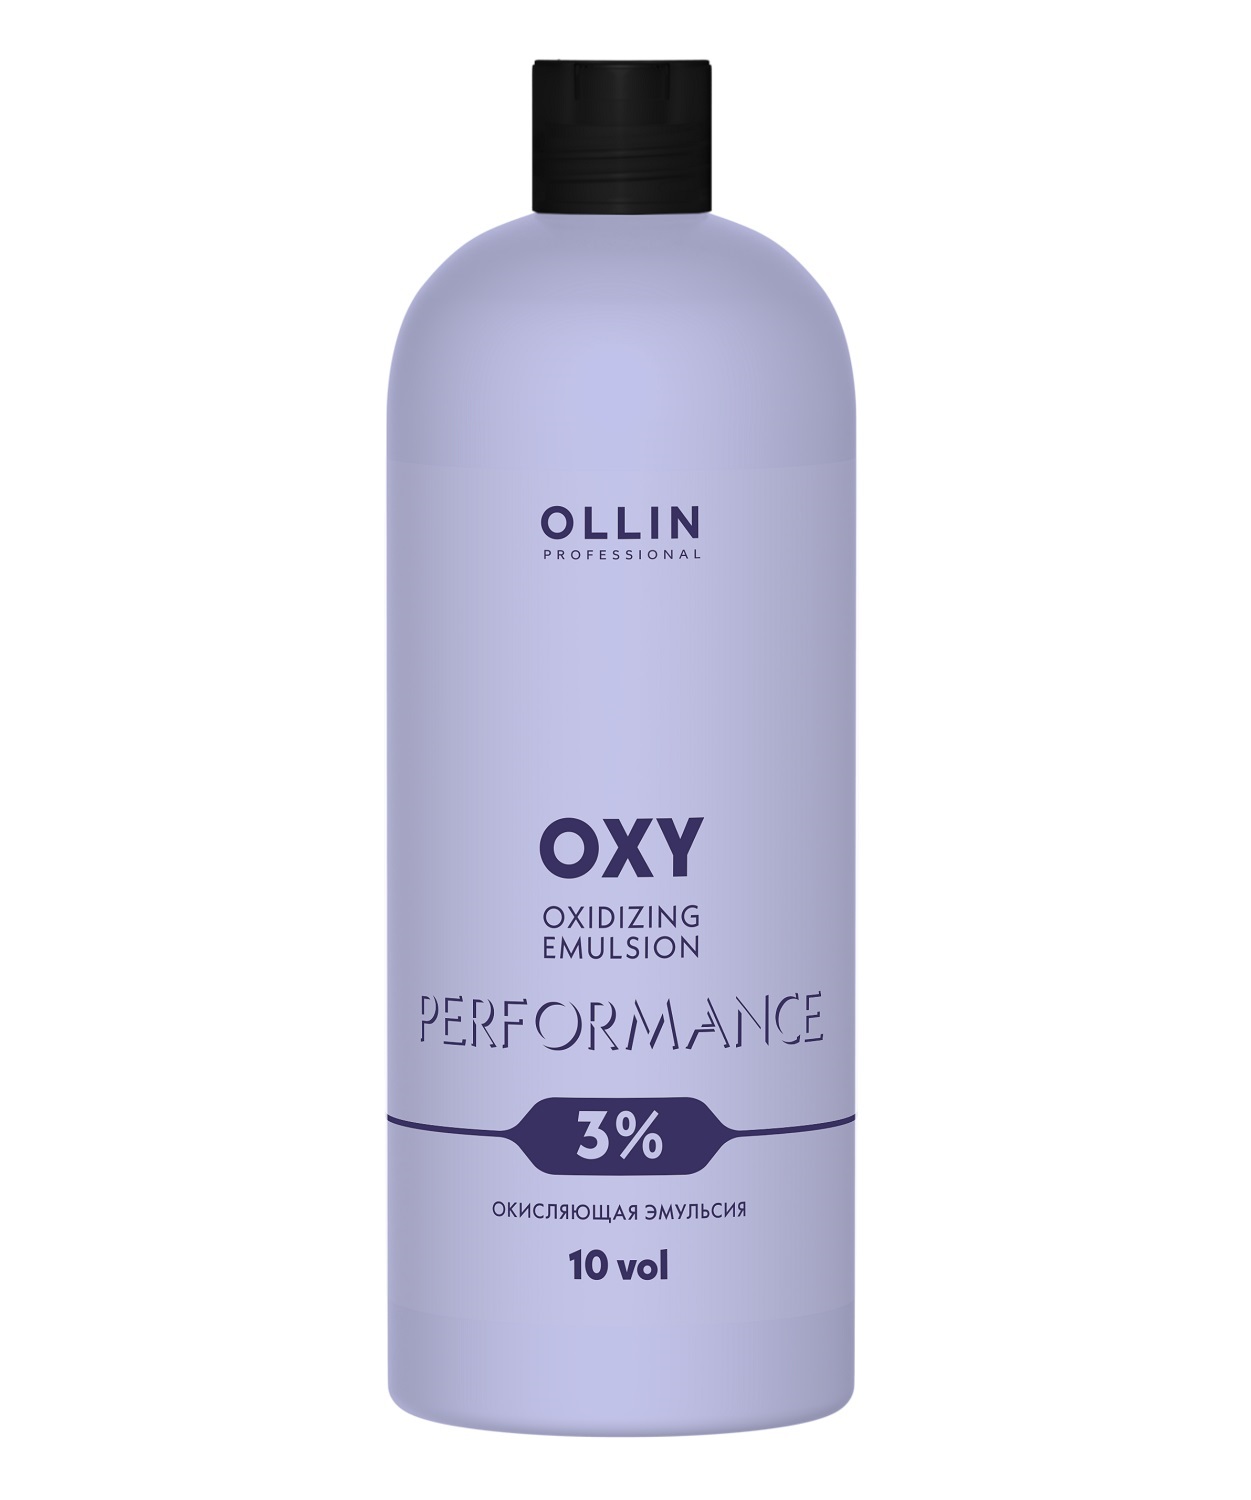 Ollin Professional Окисляющая эмульсия 3% 10 vol, 1000 мл (Ollin Professional, Performance)